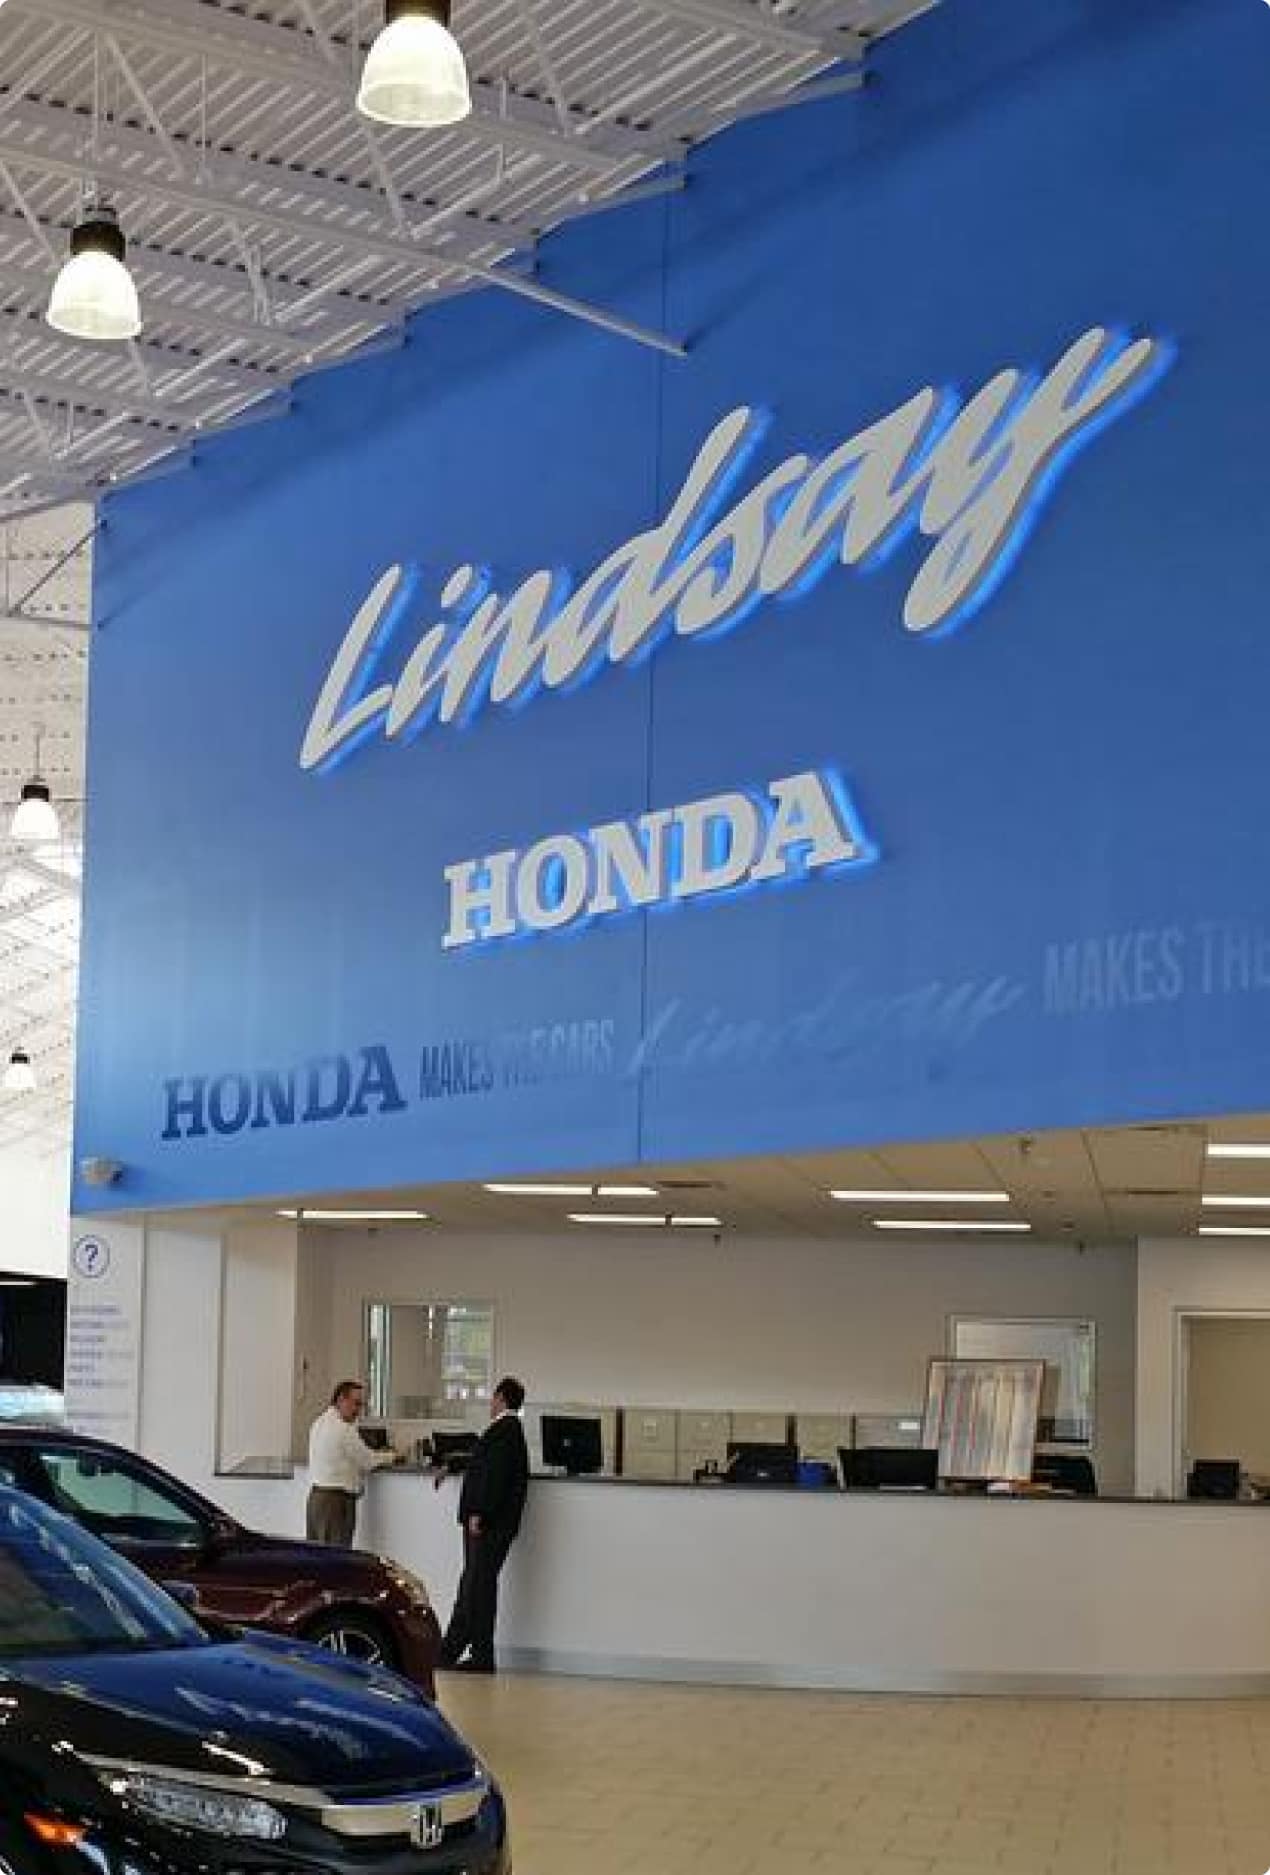 Entrance to Lindsay Honda customer center